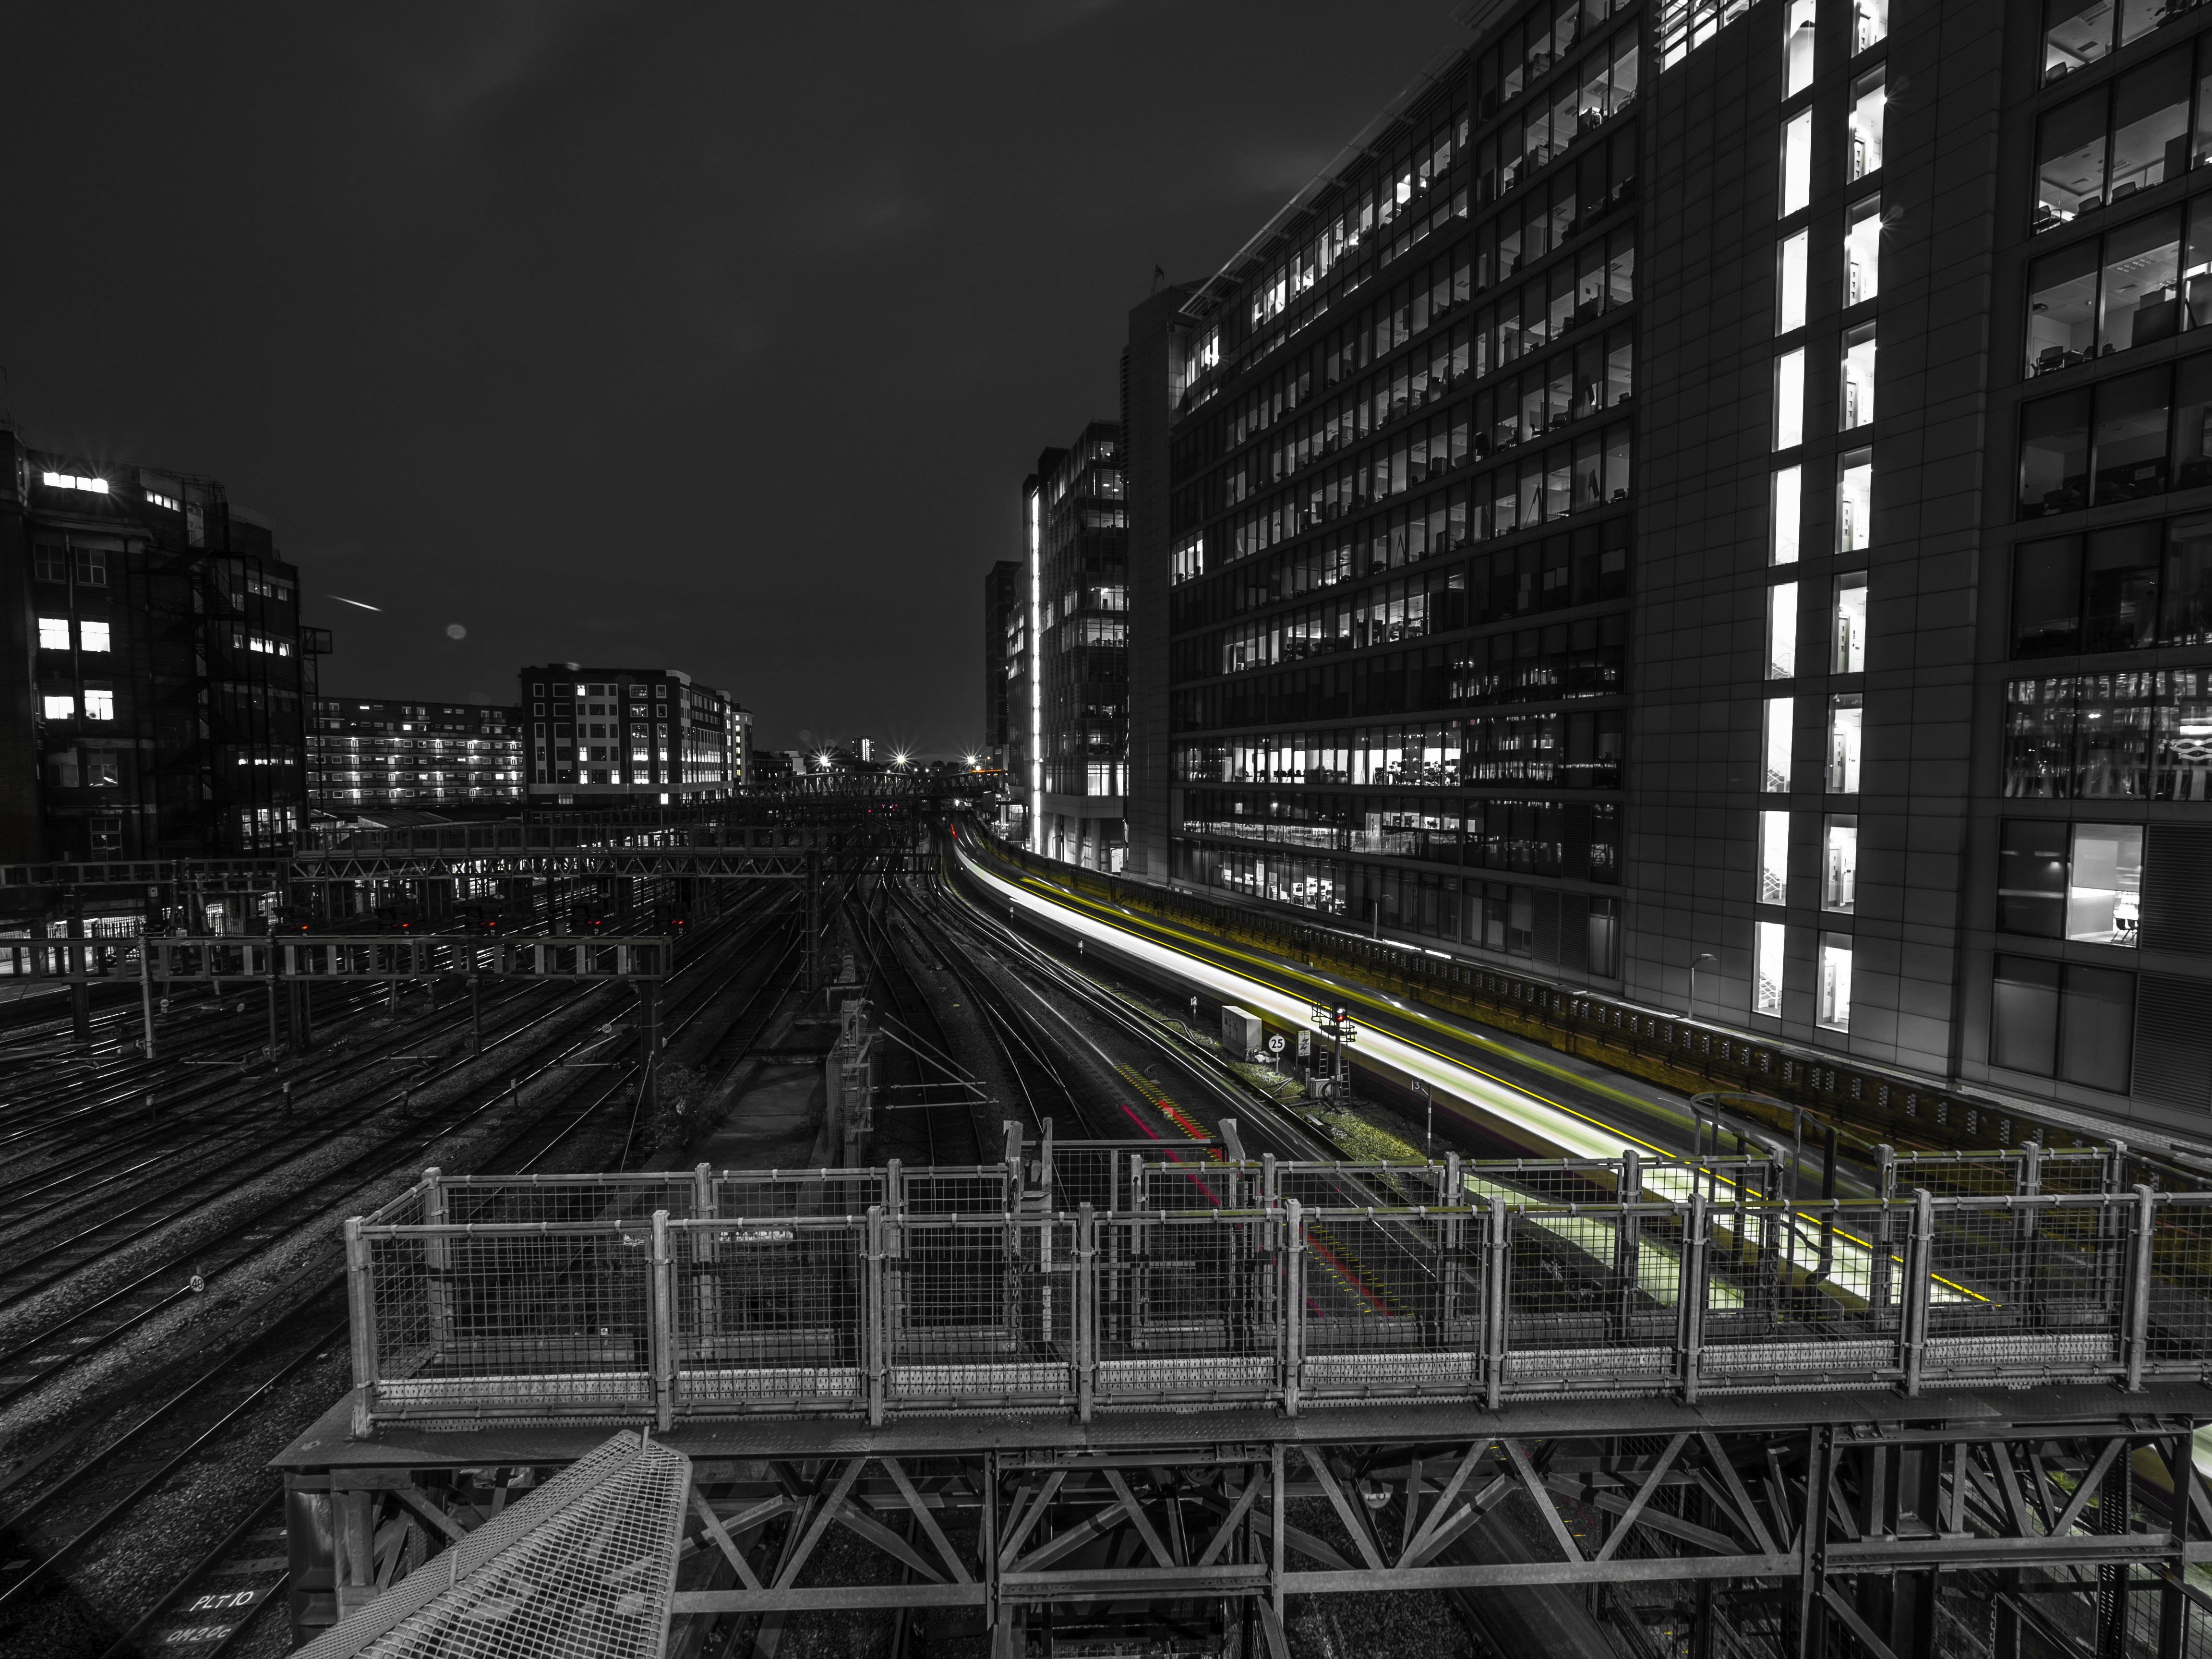 Paddington rails